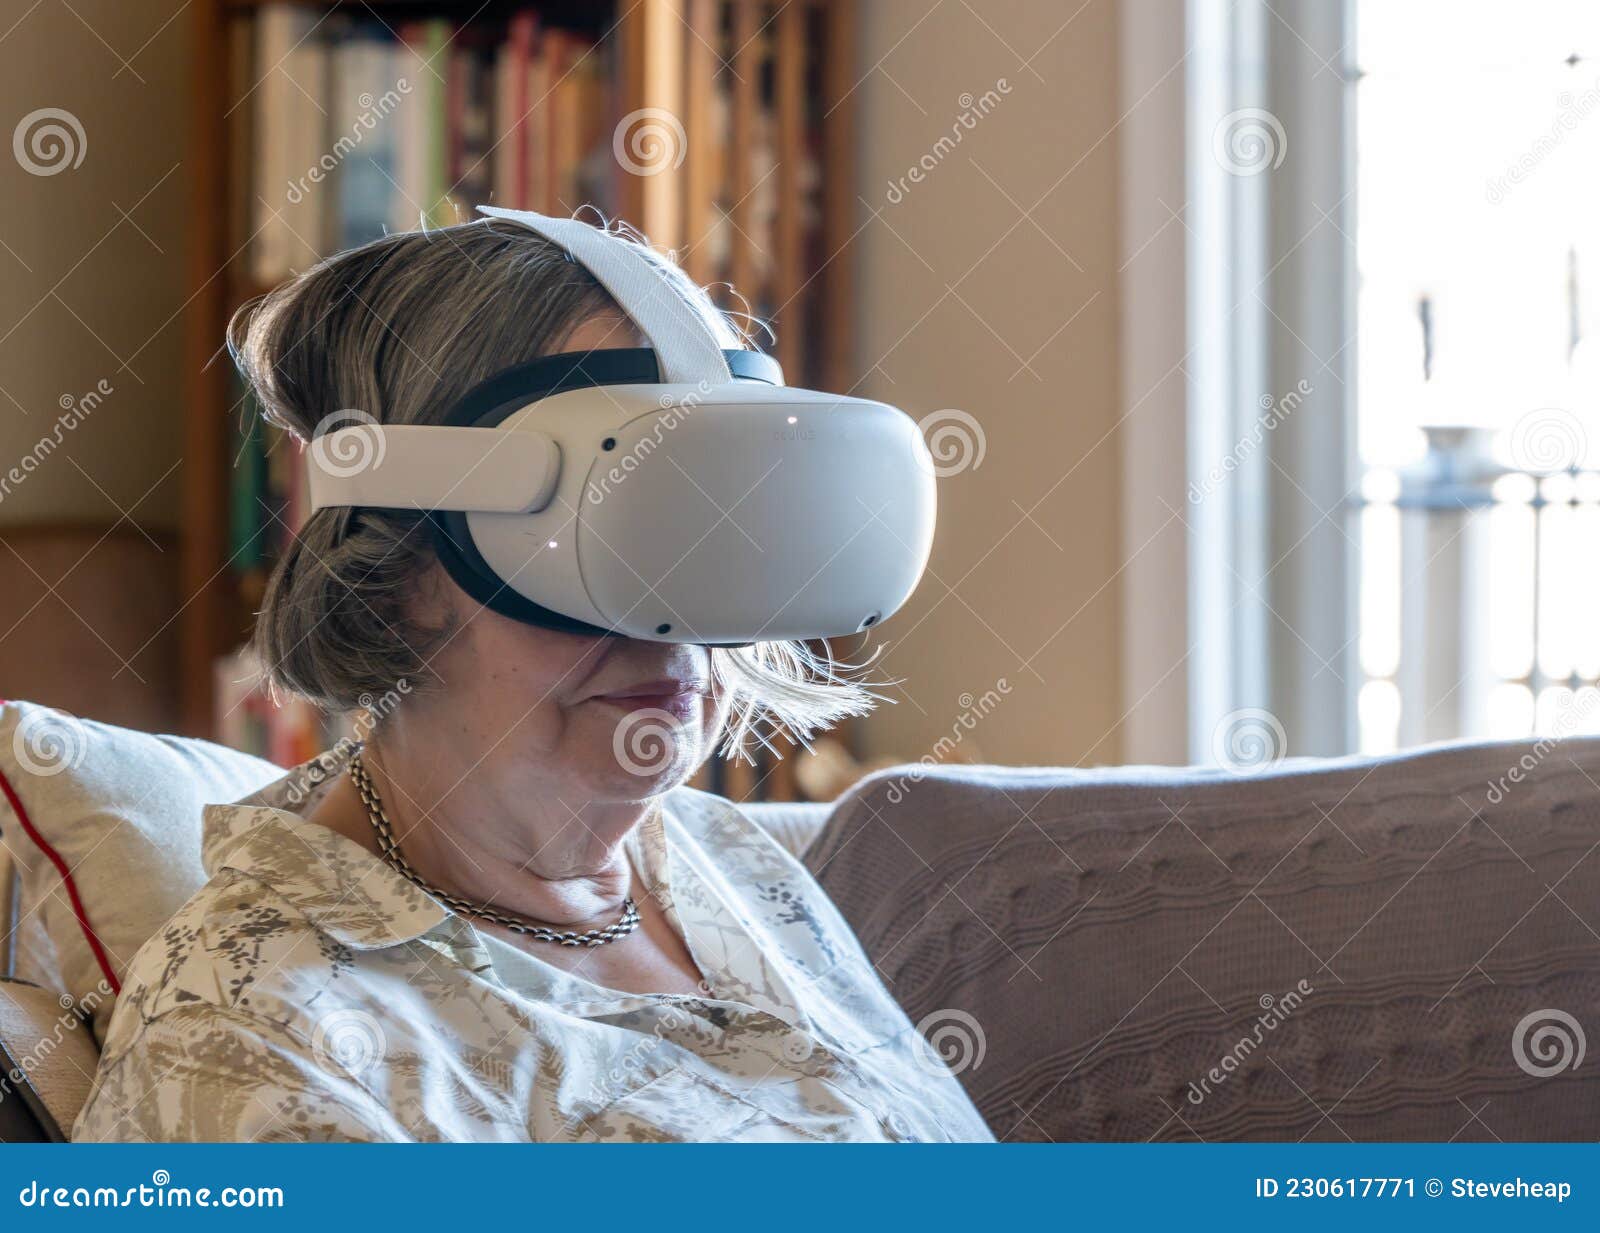 senior adult woman watching an app on a modern vr headset